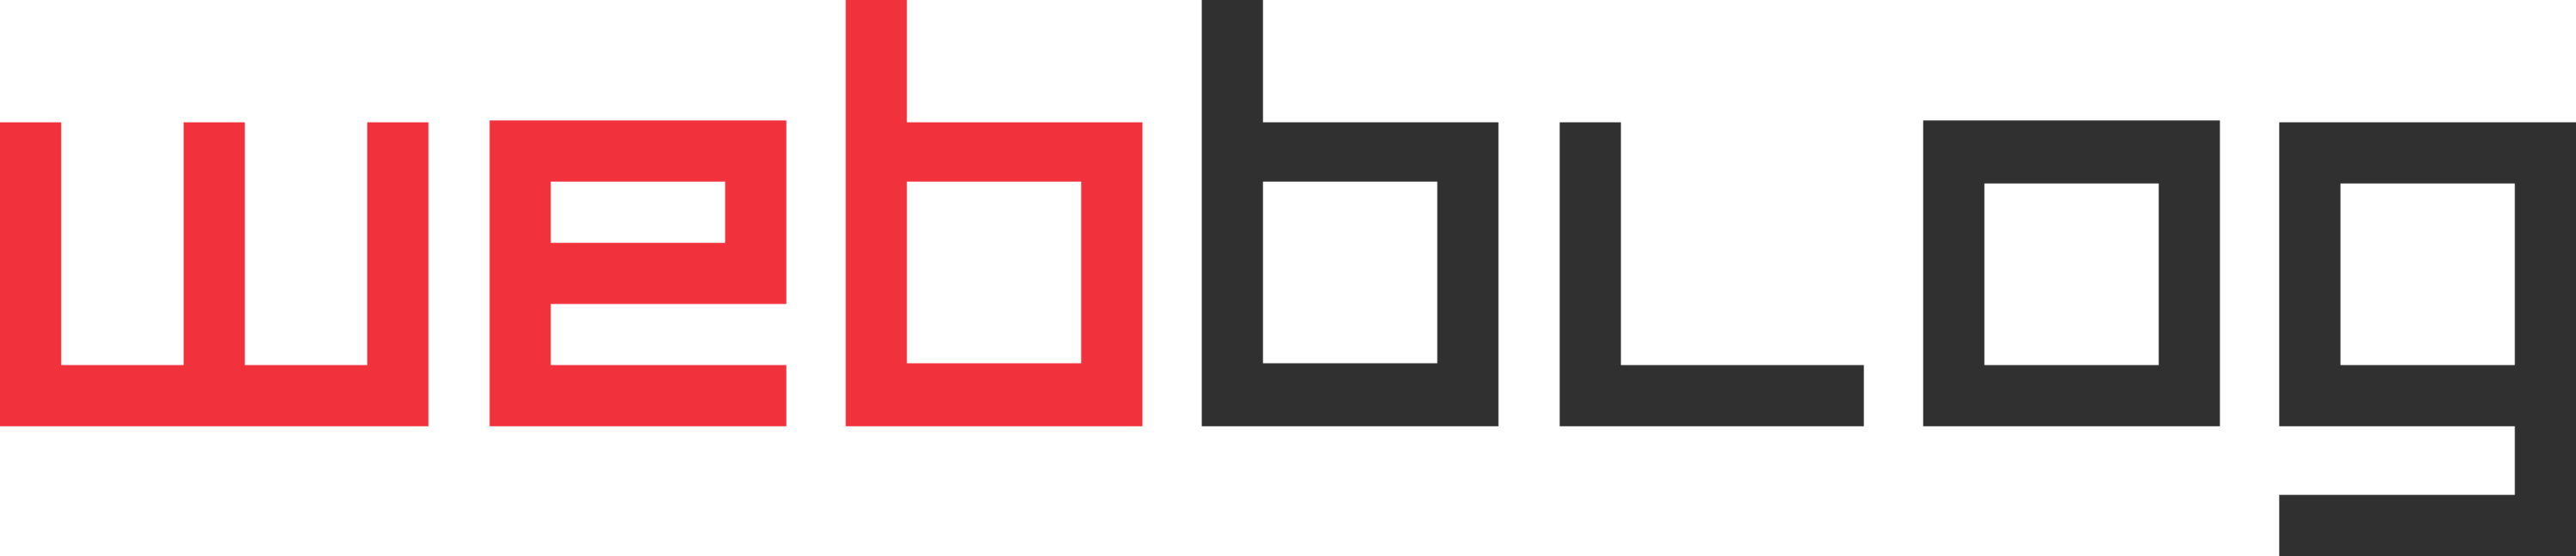 Webblog Logo